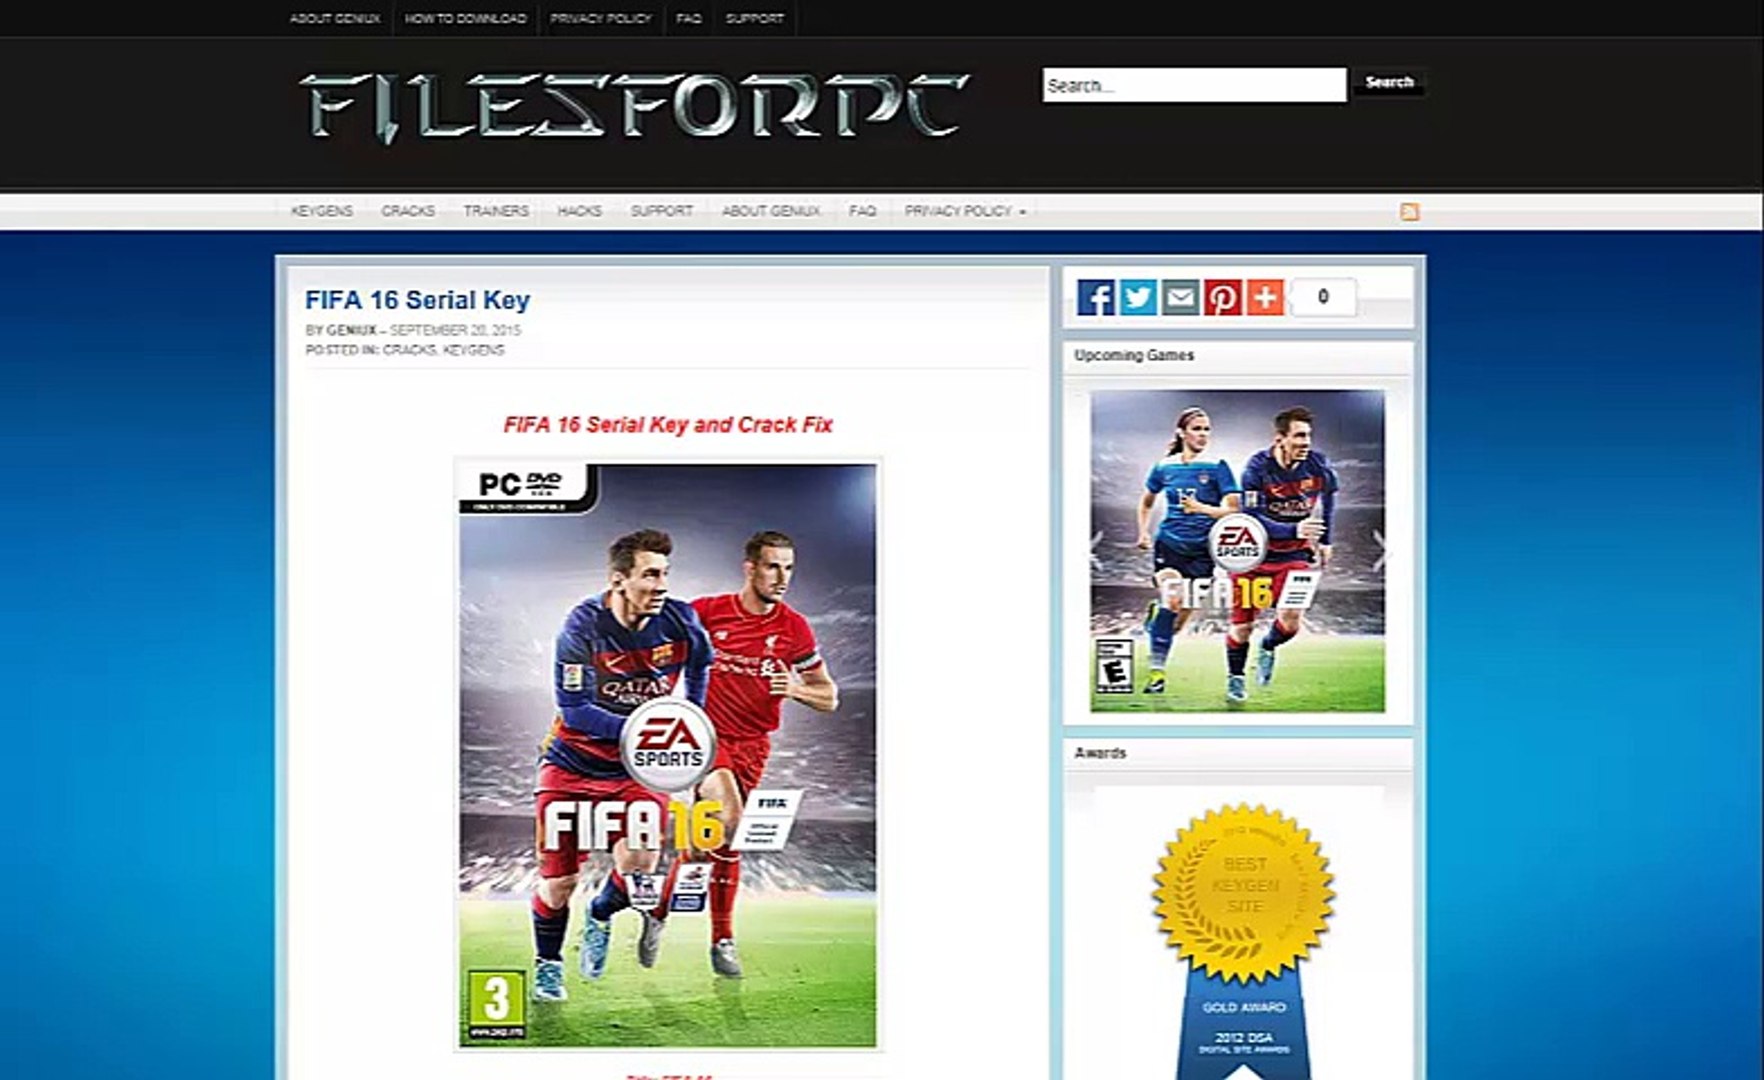 FIFA 16 Product key - cd key generator v1.0 - video Dailymotion